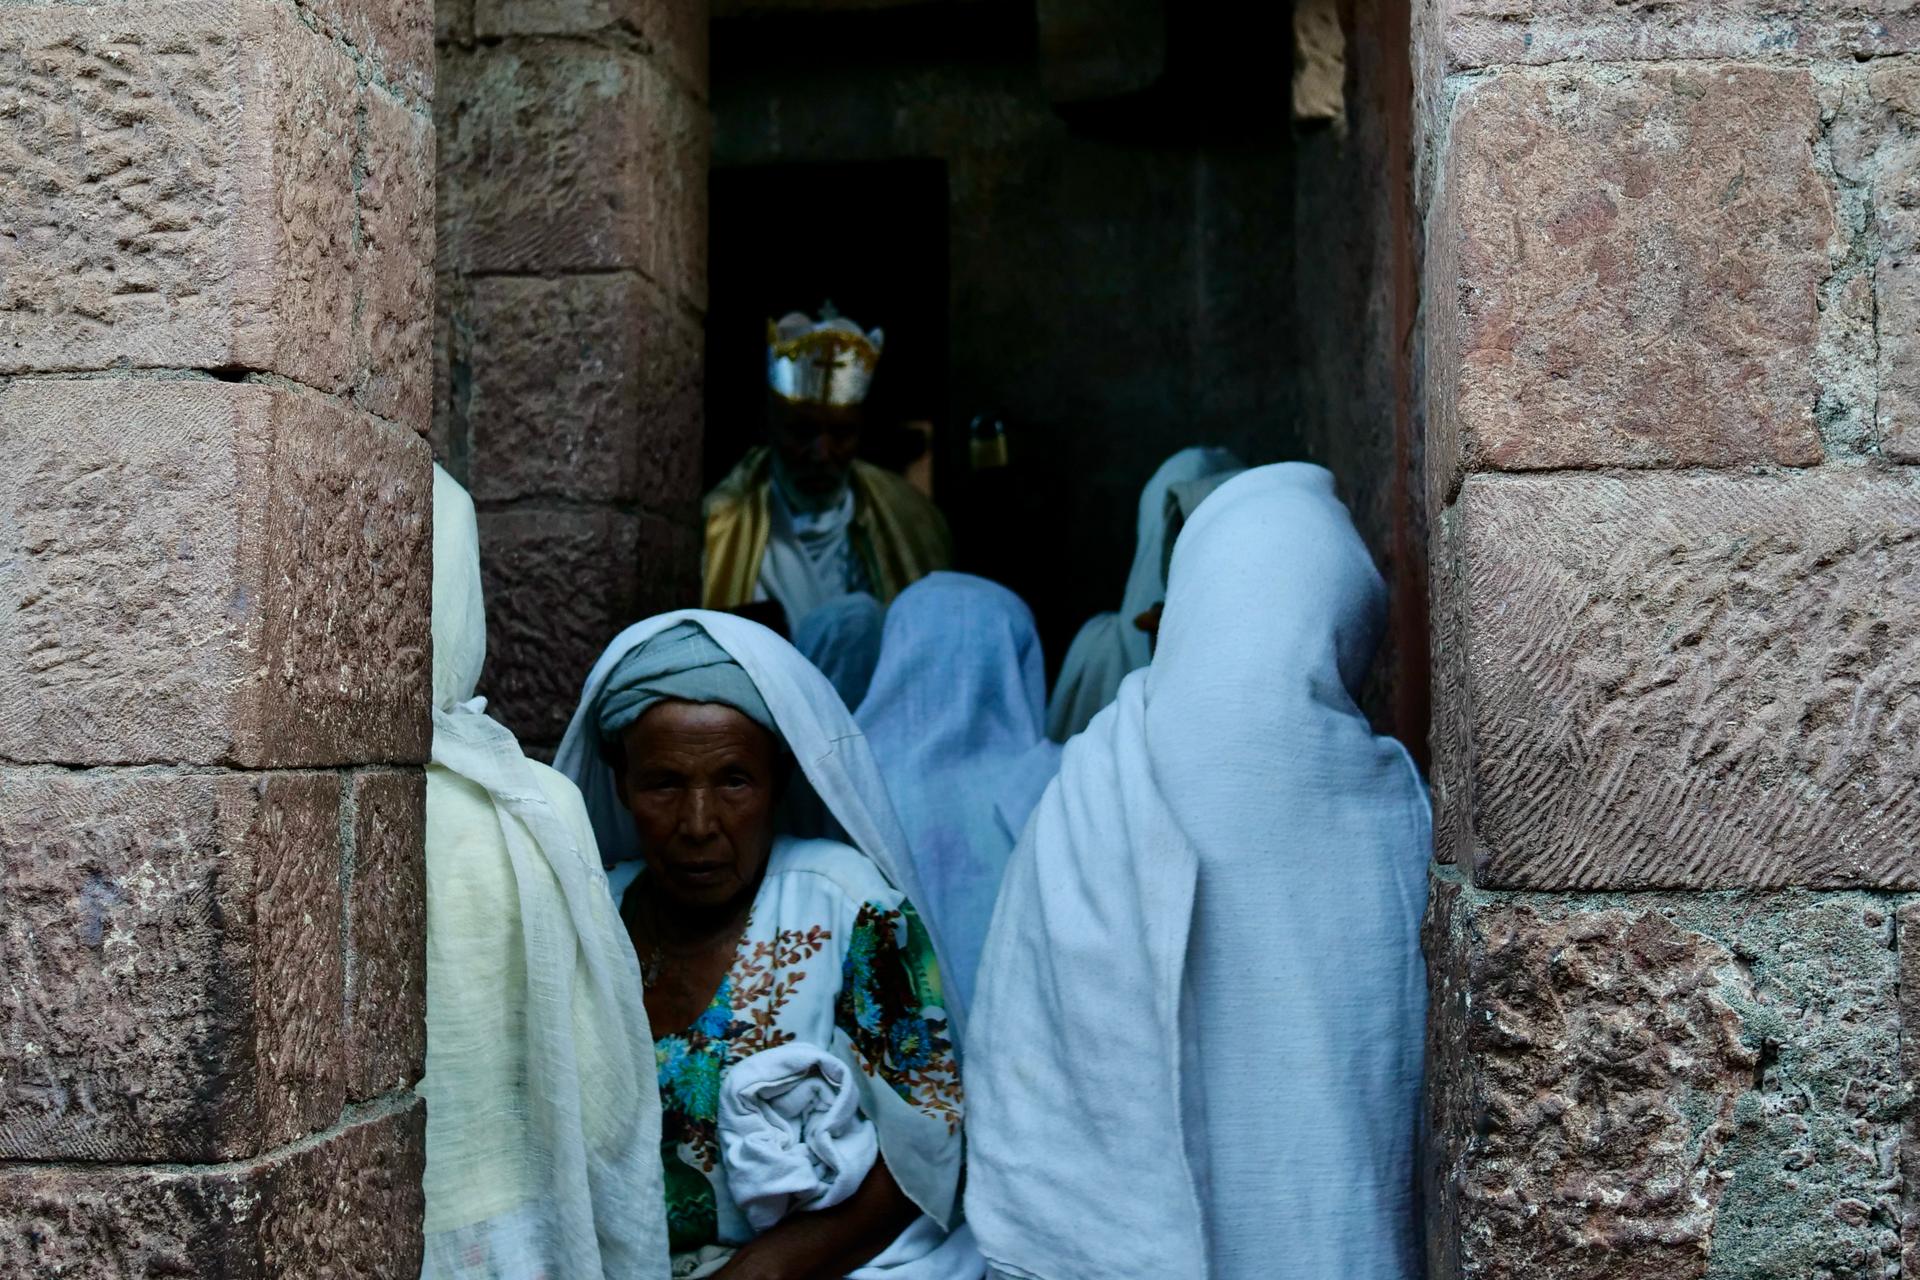 Women praying inside a 13th-century rock-hewn church in Lalibela, Ethiopia, Feb. 16, 2022.